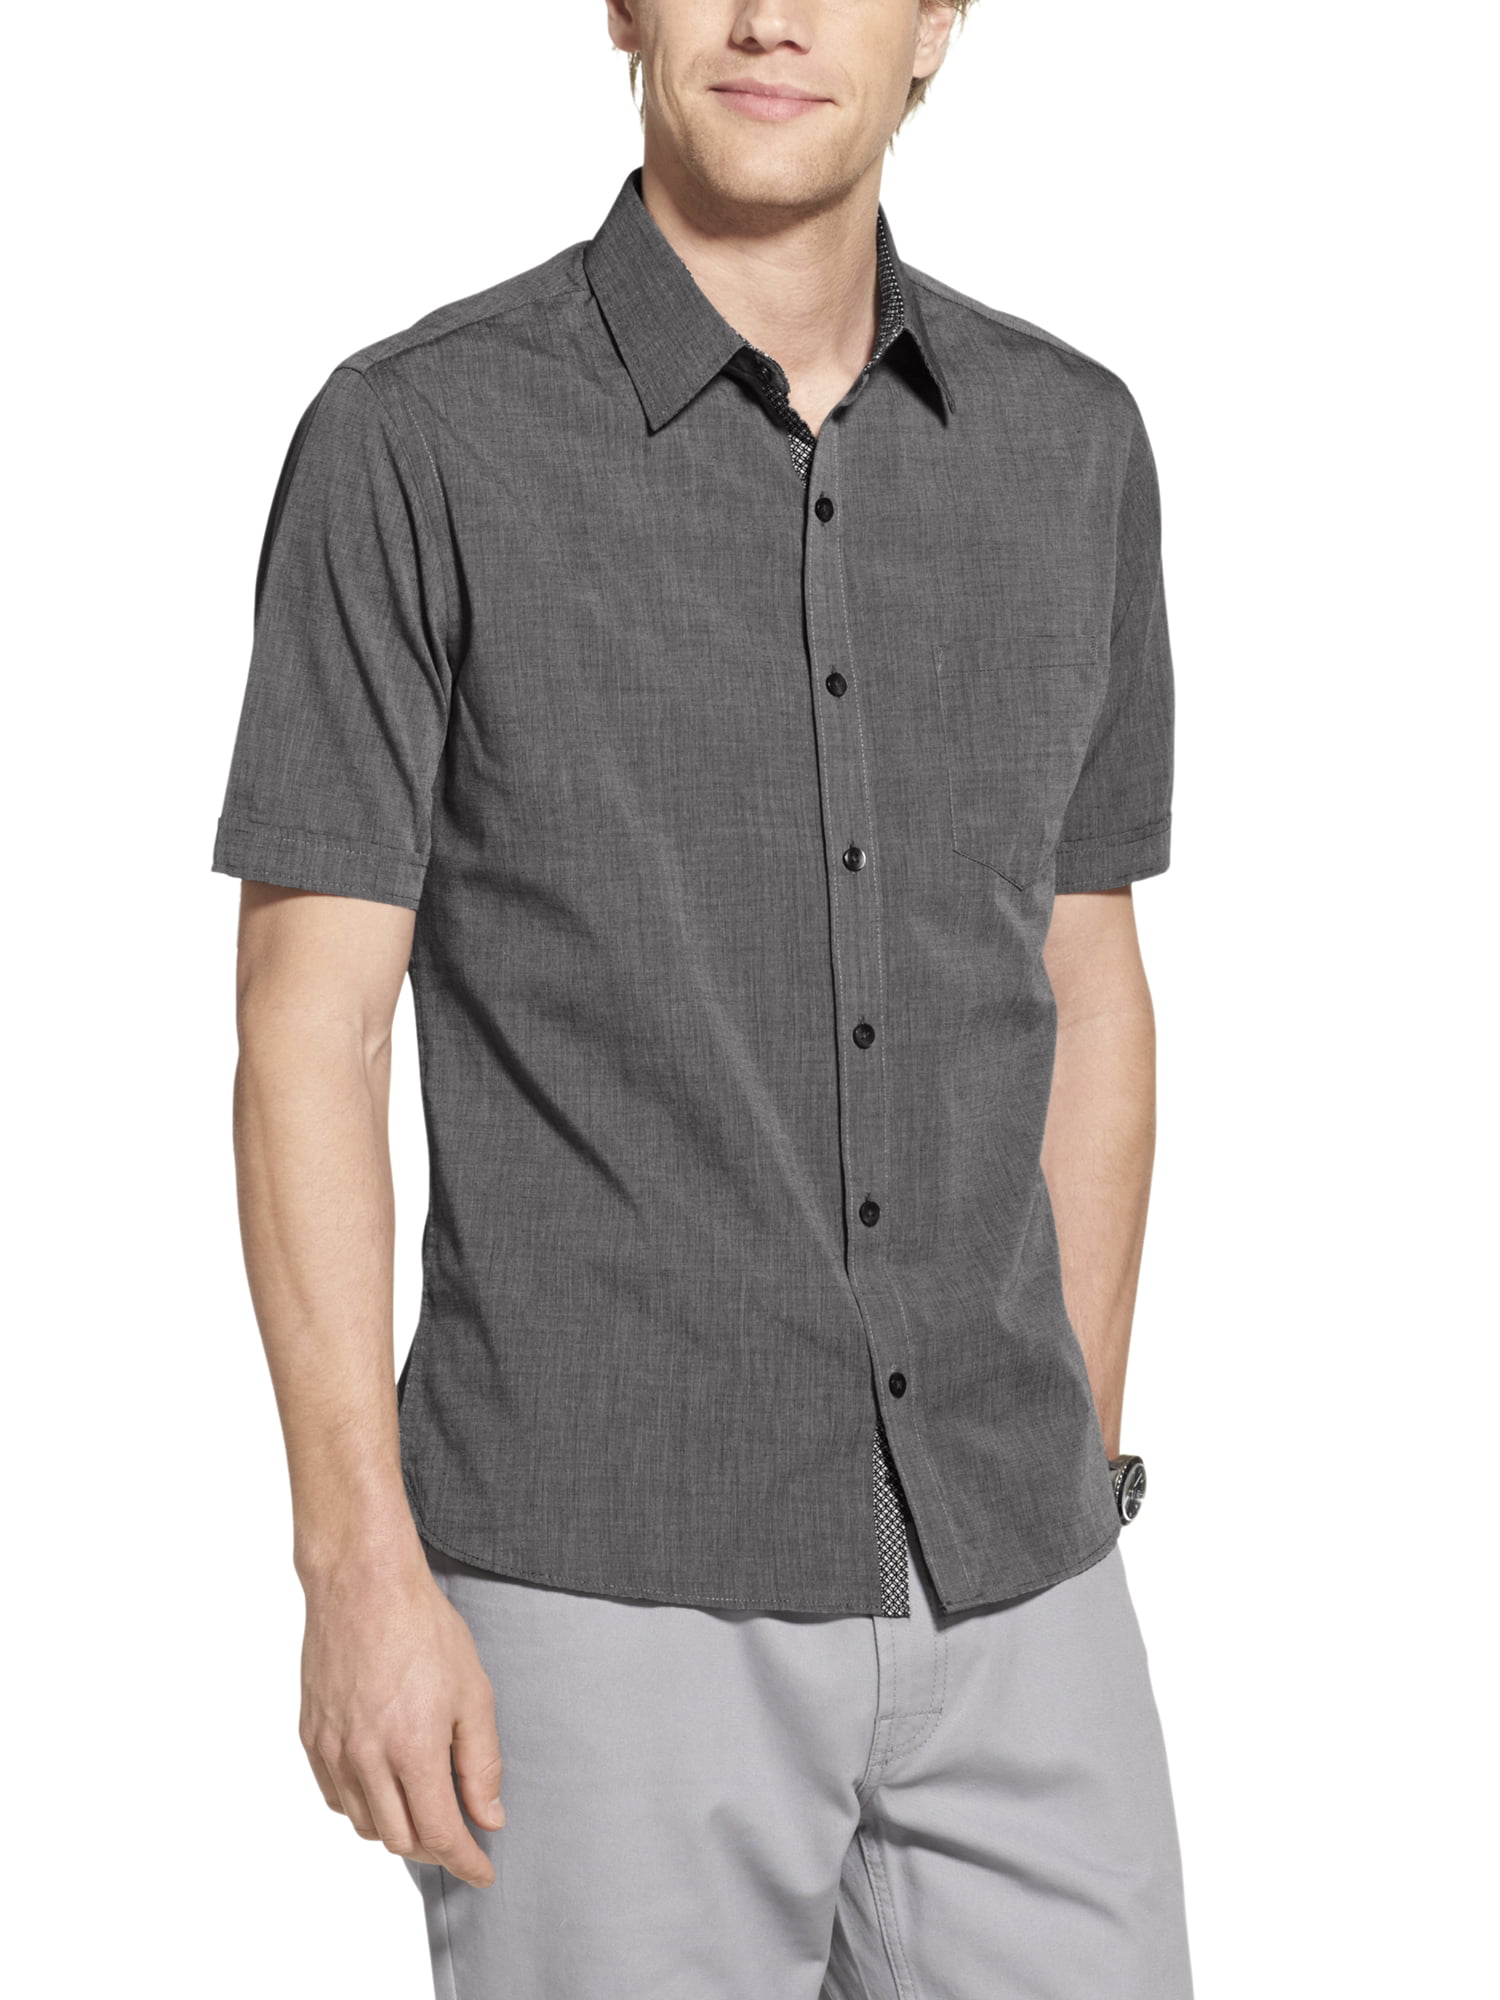 Geoffrey Beene Men's Slim Fit Short Sleeve Shirt - Walmart.com